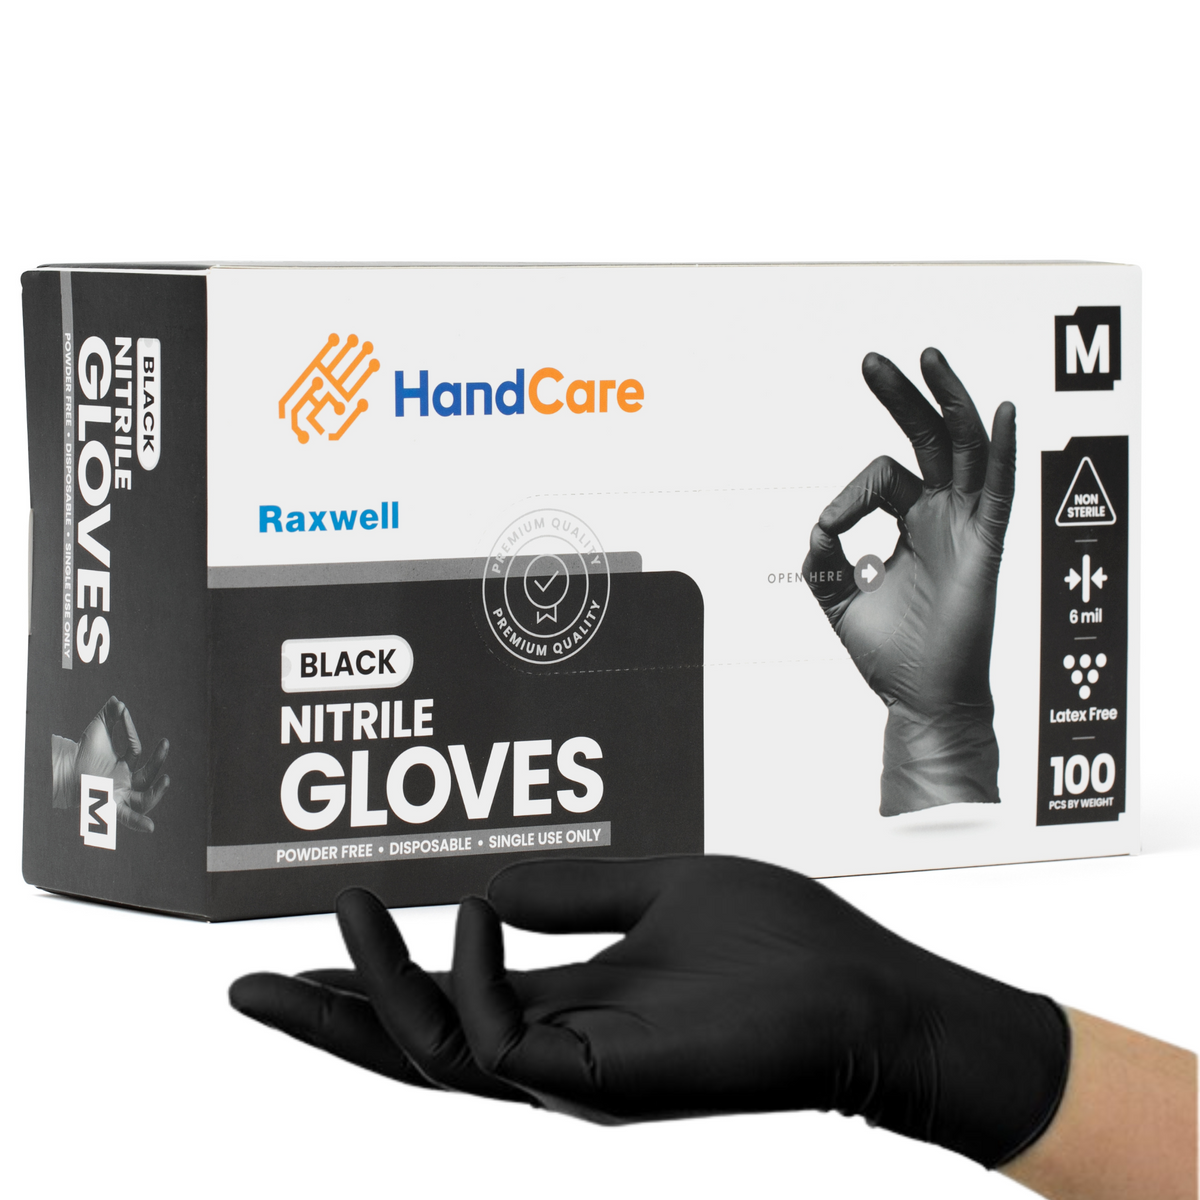 HandCare Black Nitrile Gloves - Exam Grade, Powder Free (6 Mil), 100 Gloves (1 Box)